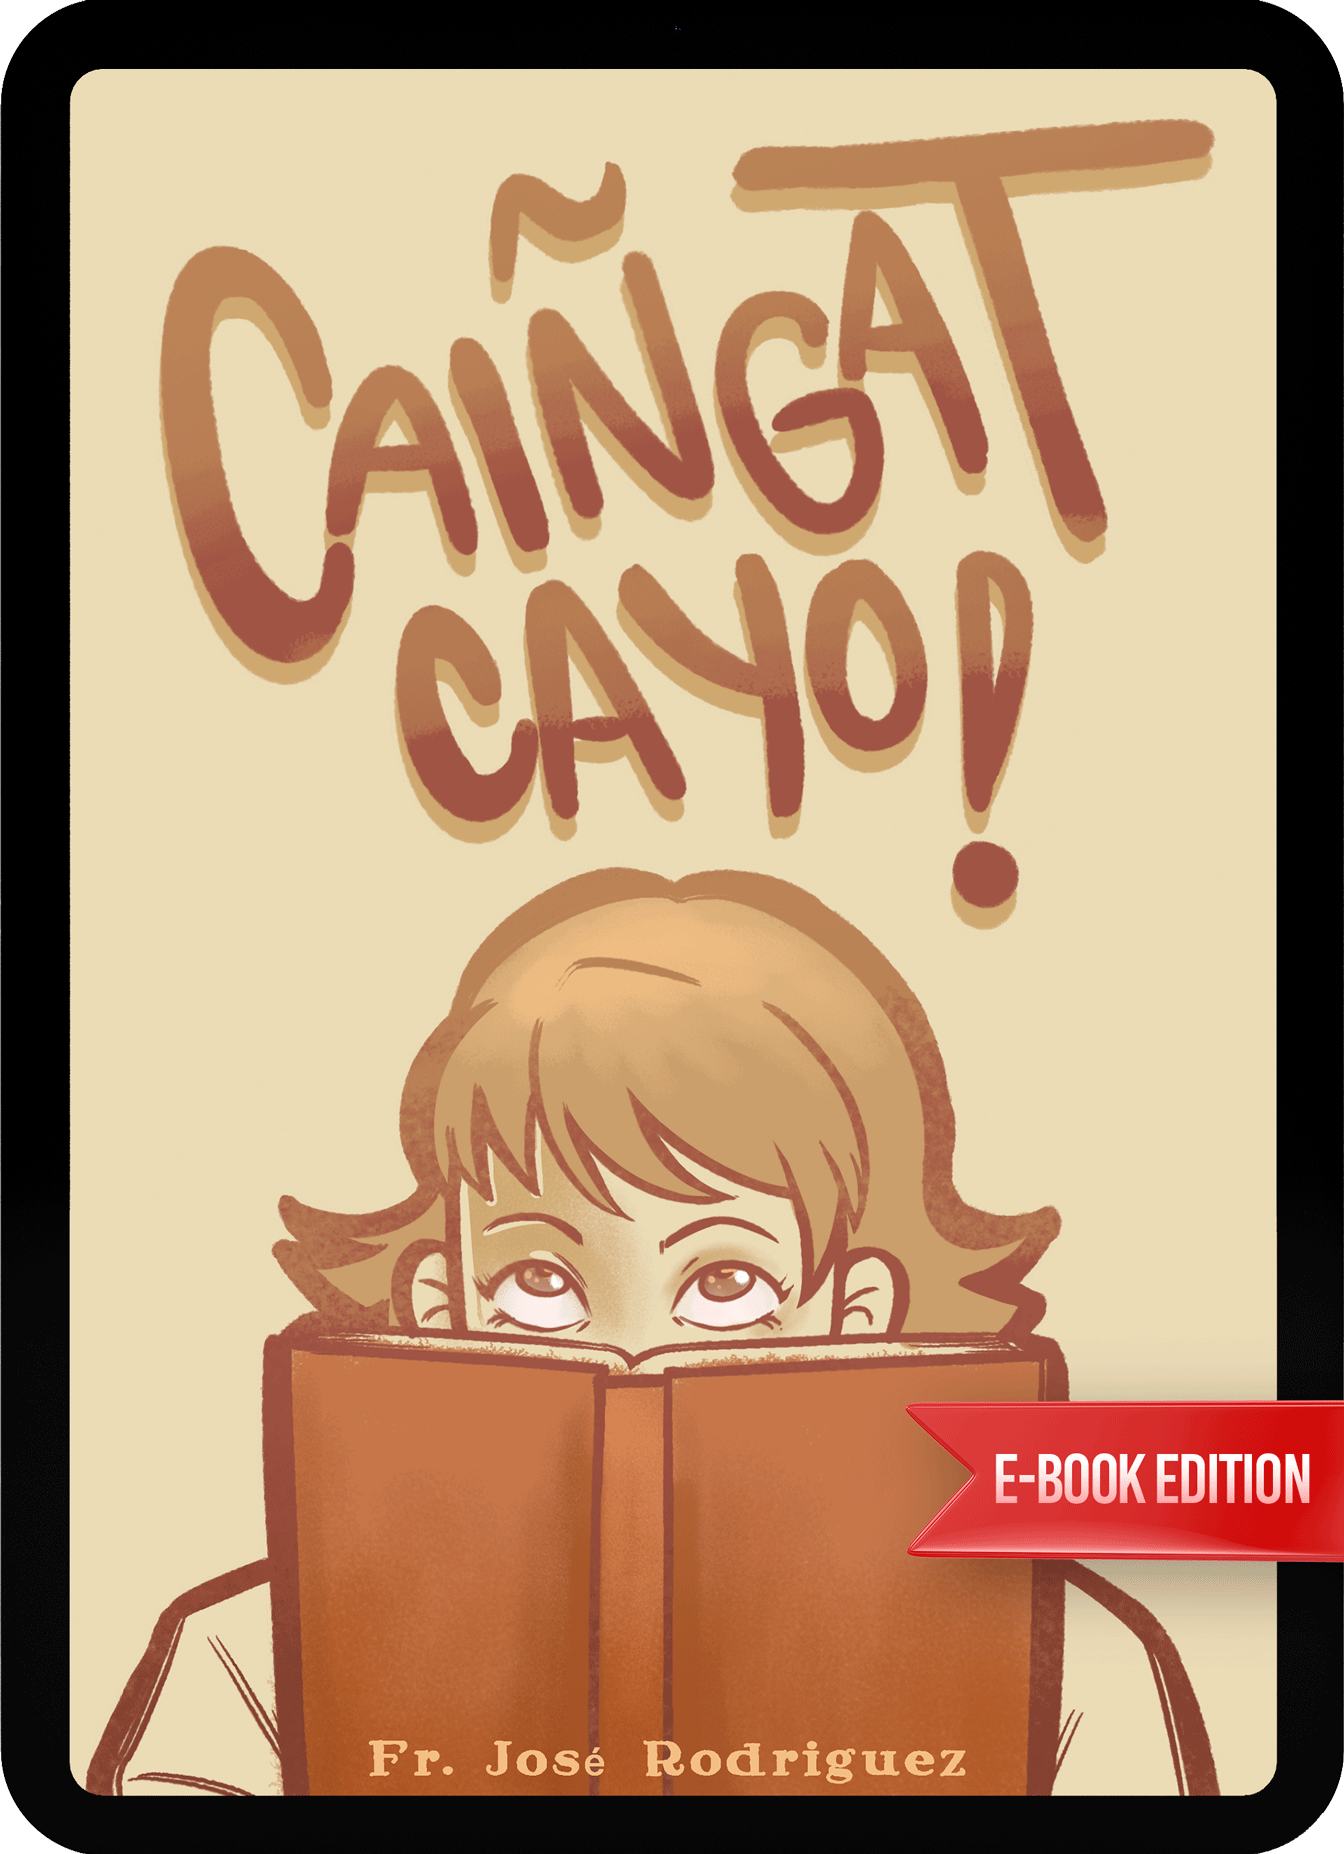 eBook - CAIÑGAT CAYO! by Fr. José Rodriguez